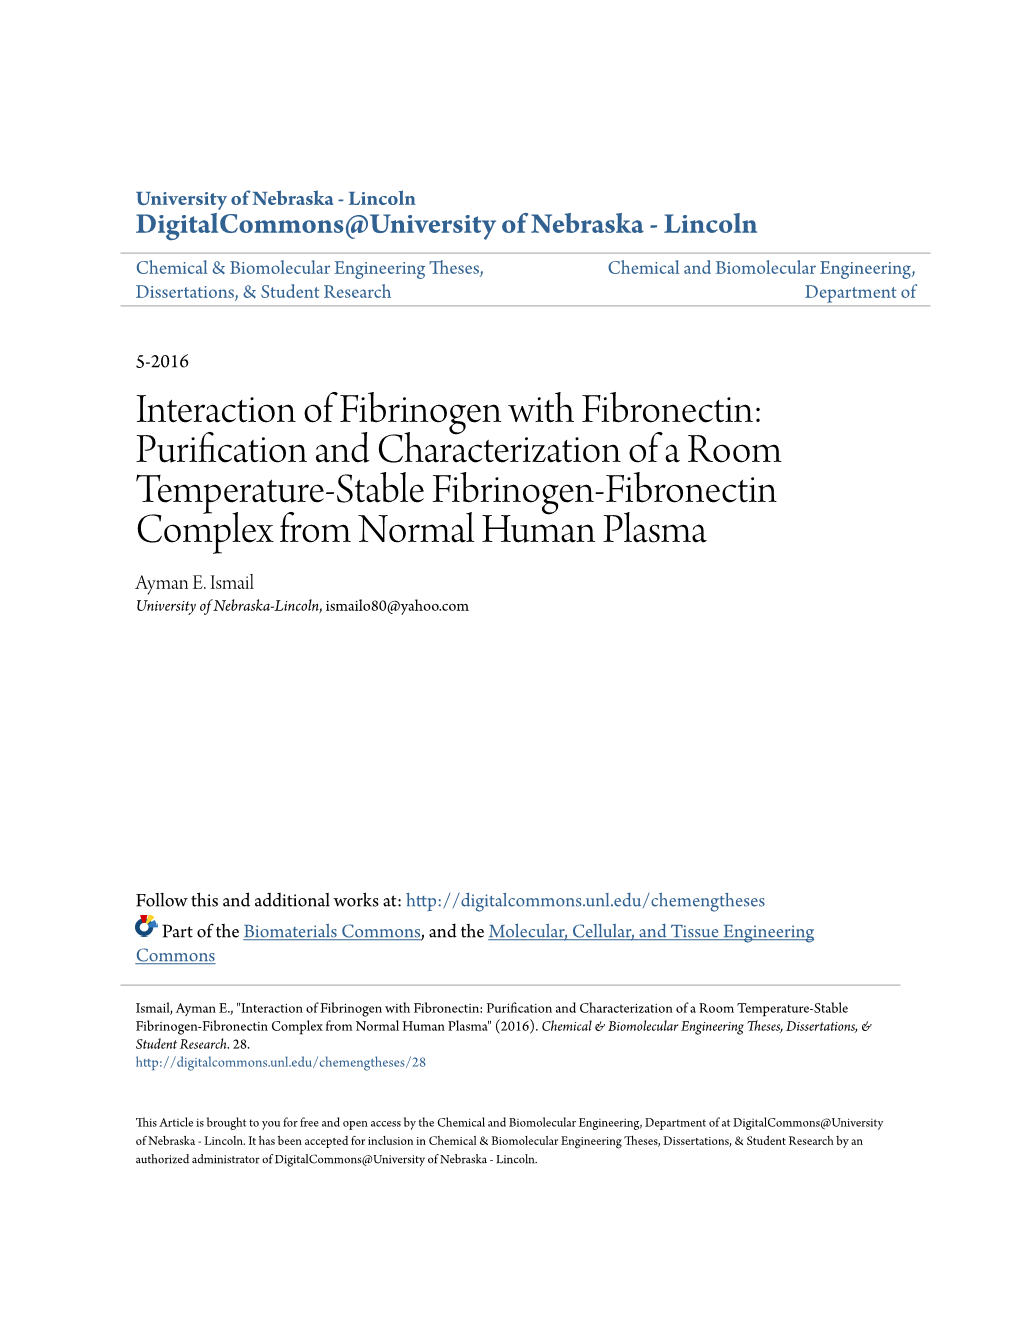 Interaction of Fibrinogen with Fibronectin